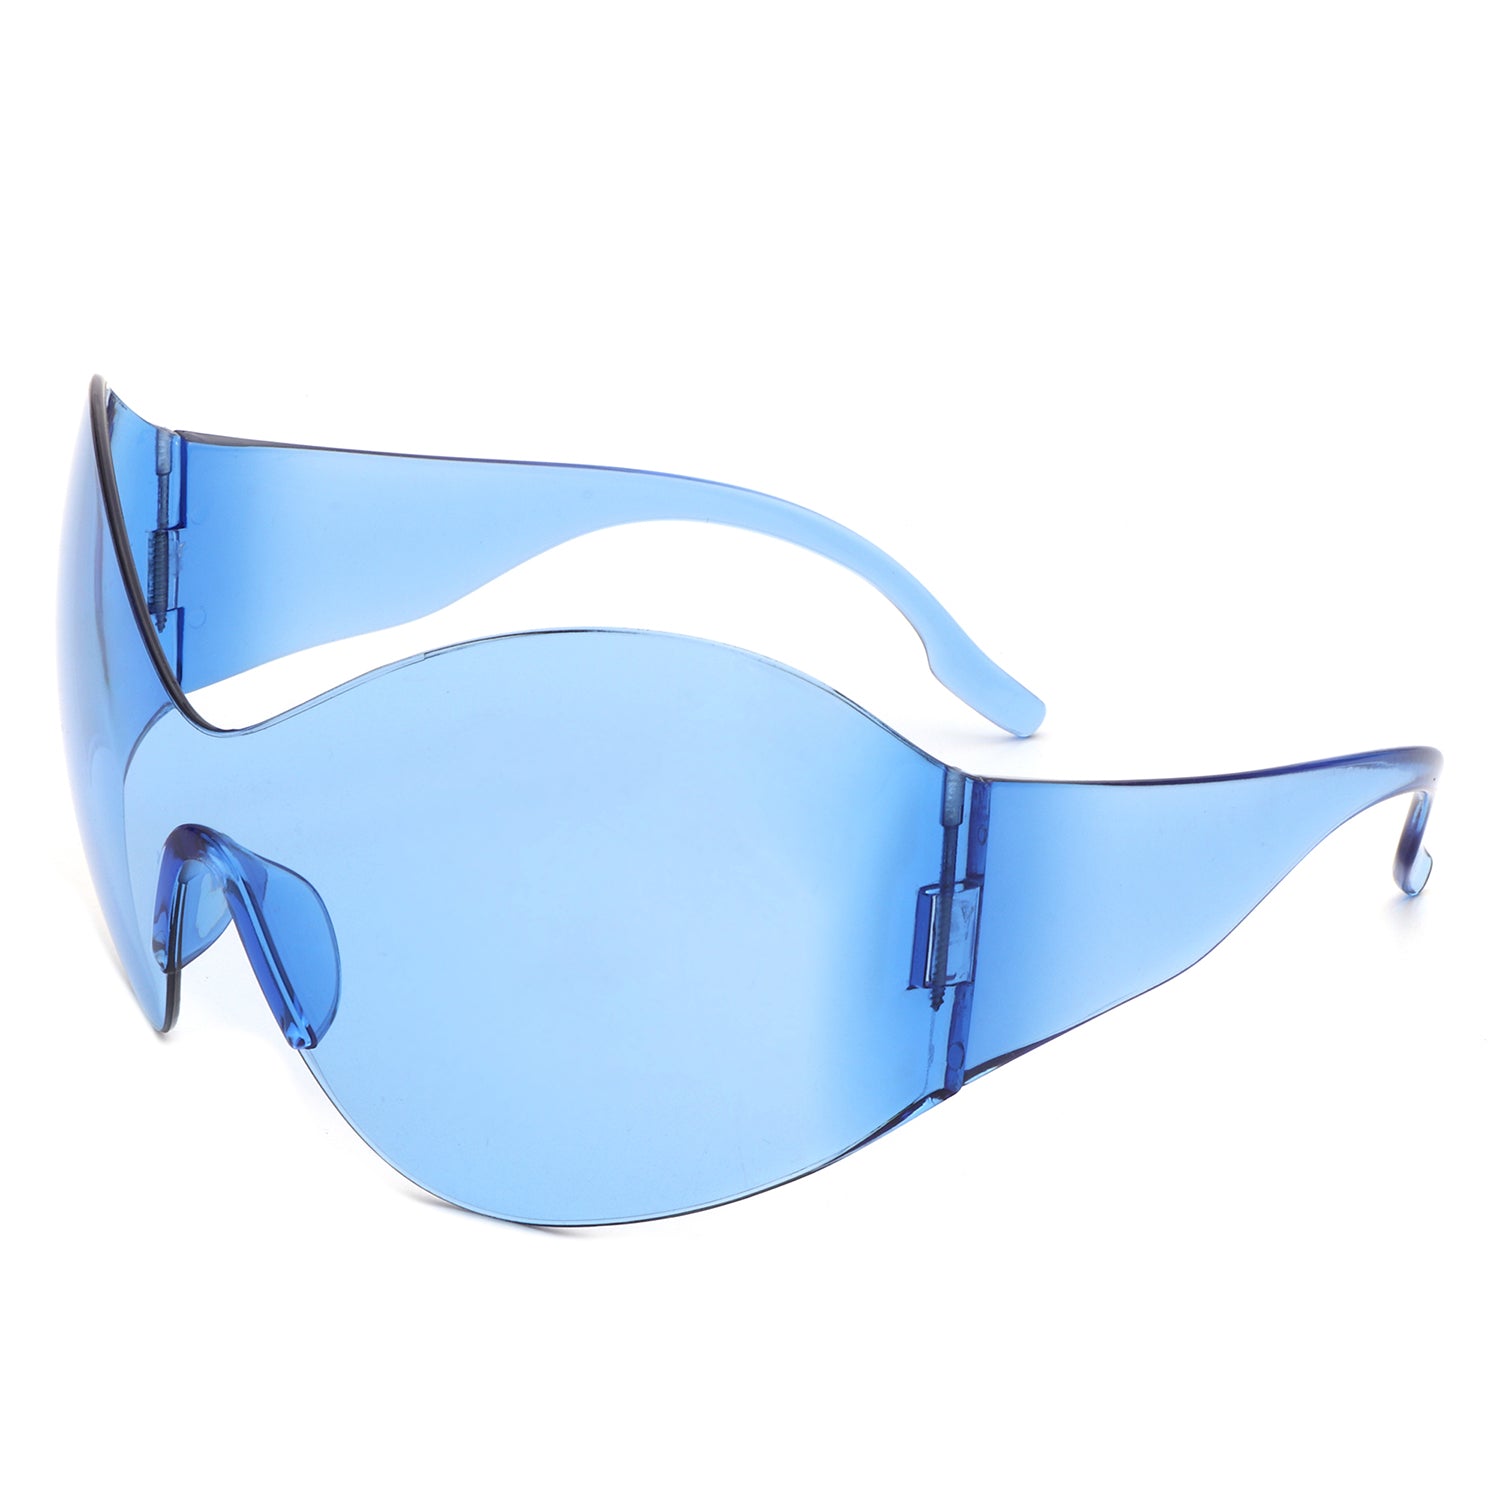 HW1012 - Women Fashion Rimless Oversized Shield Wraparound Wholesale Sunglasses